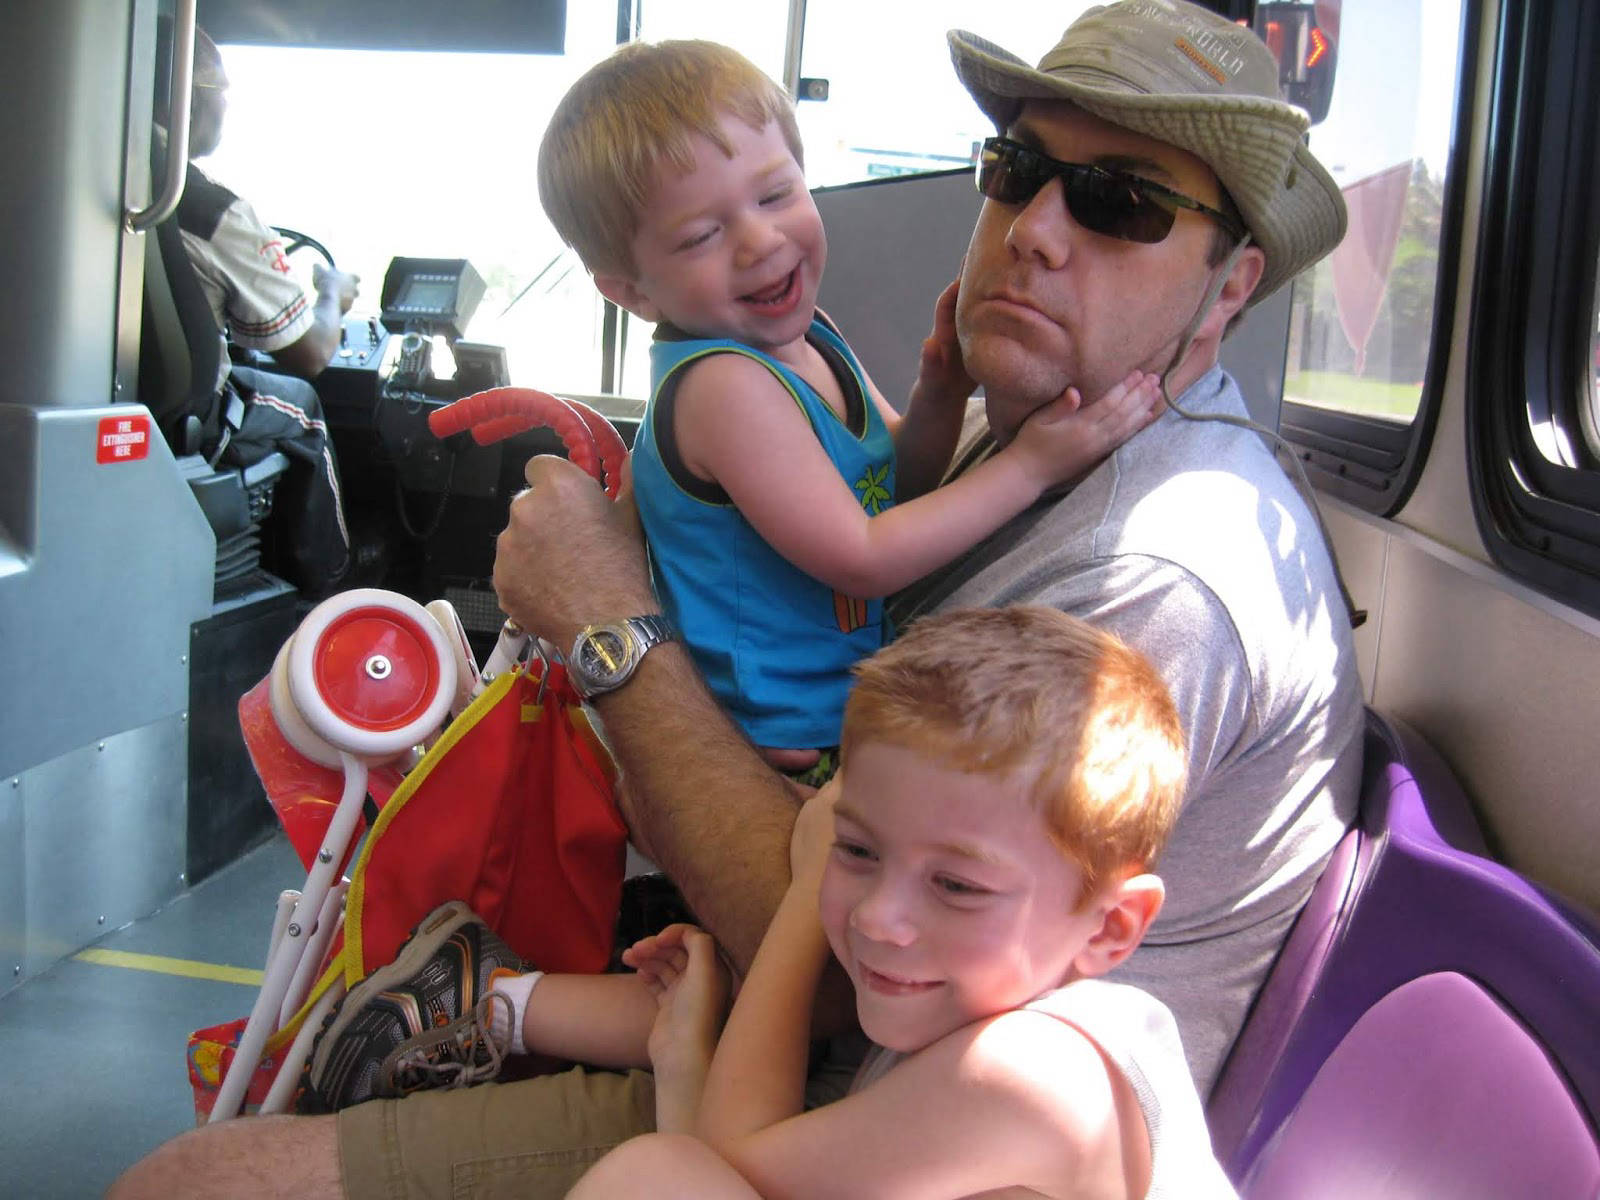 David Brodosi and family traveling to Disney